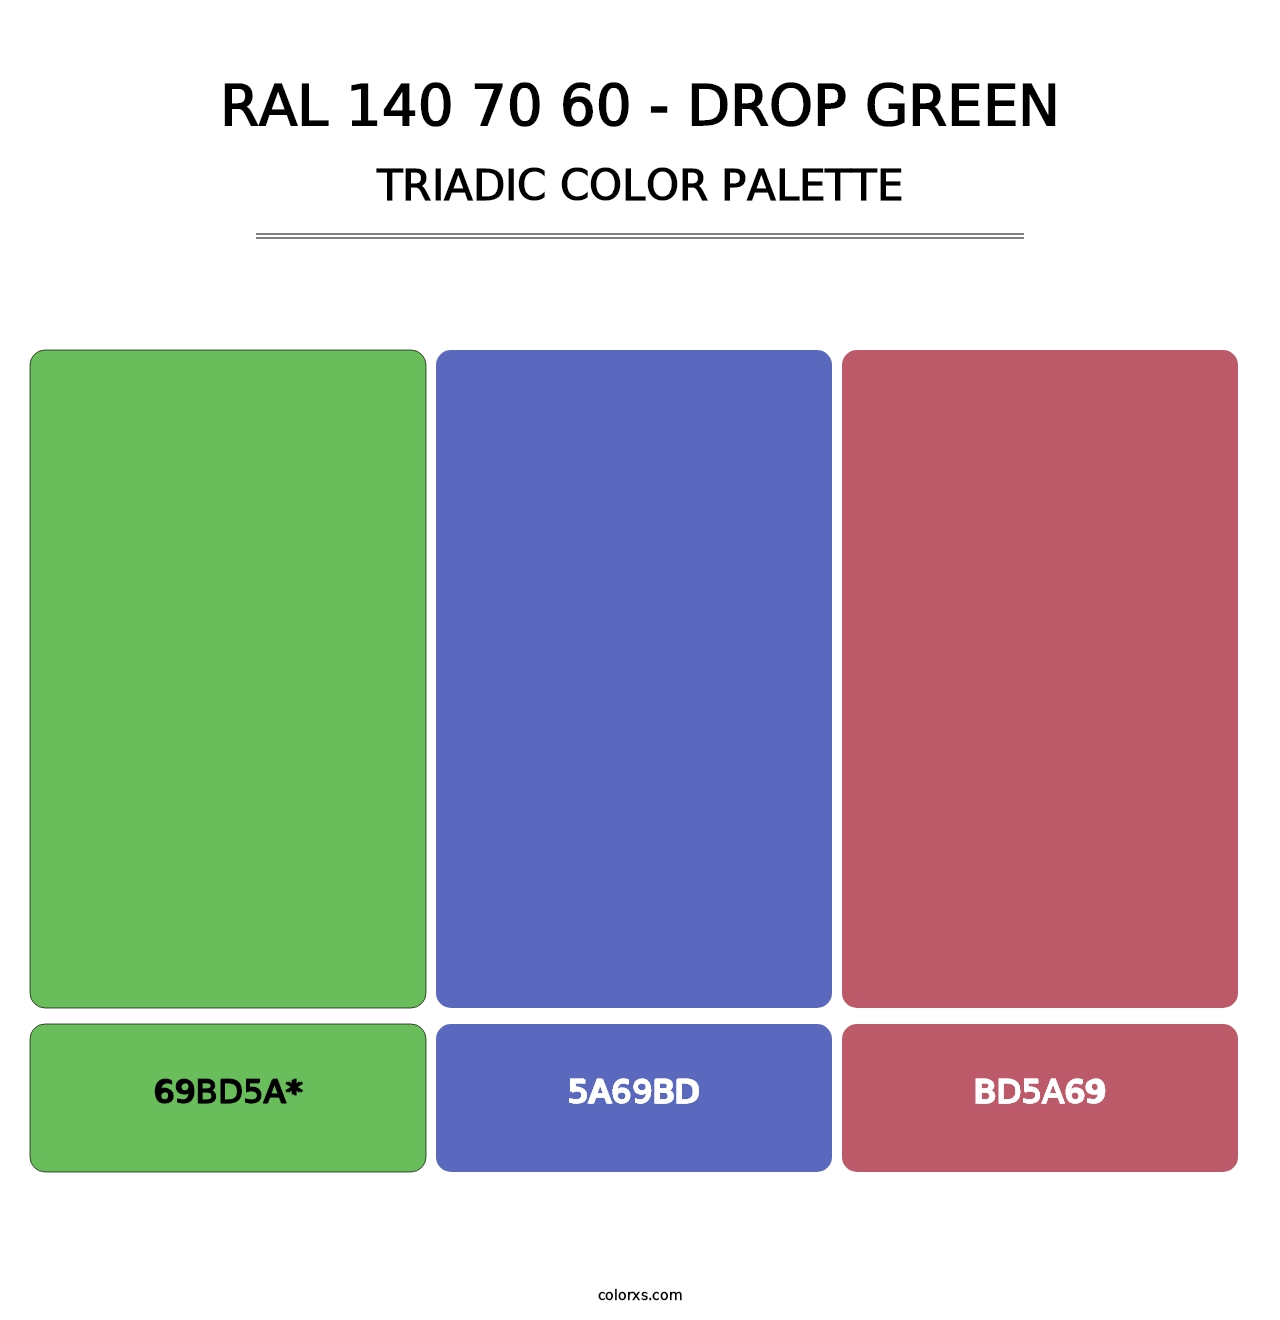 RAL 140 70 60 - Drop Green - Triadic Color Palette